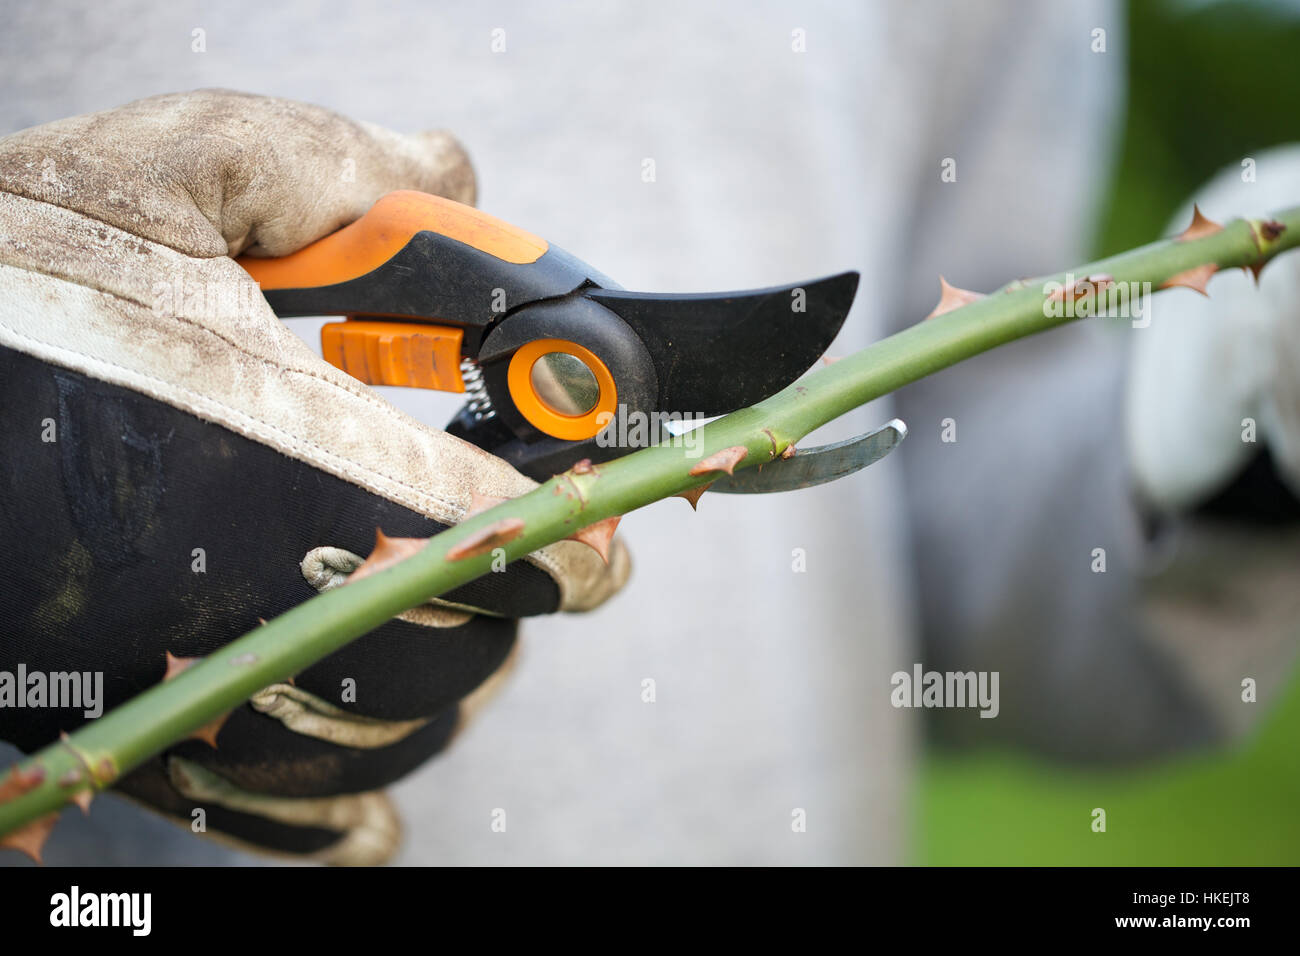 gardener pruning branch. secateurs, pruning, garden, work tool. Stock Photo